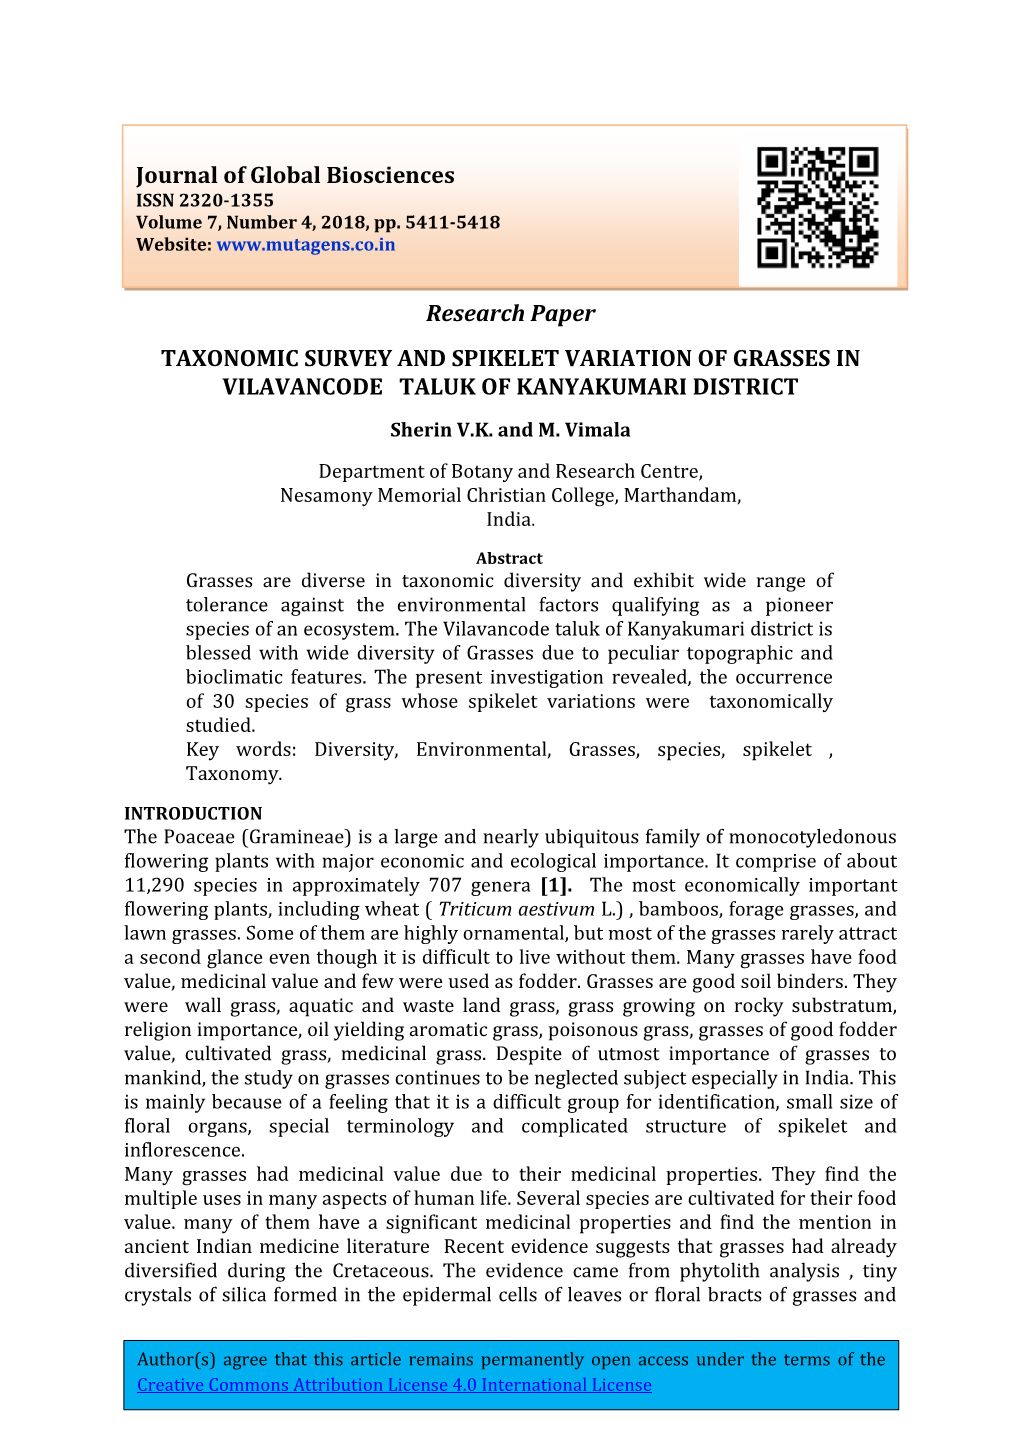 Research Paper TAXONOMIC SURVEY and SPIKELET VARIATION of GRASSES in VILAVANCODE TALUK of KANYAKUMARI DISTRICT